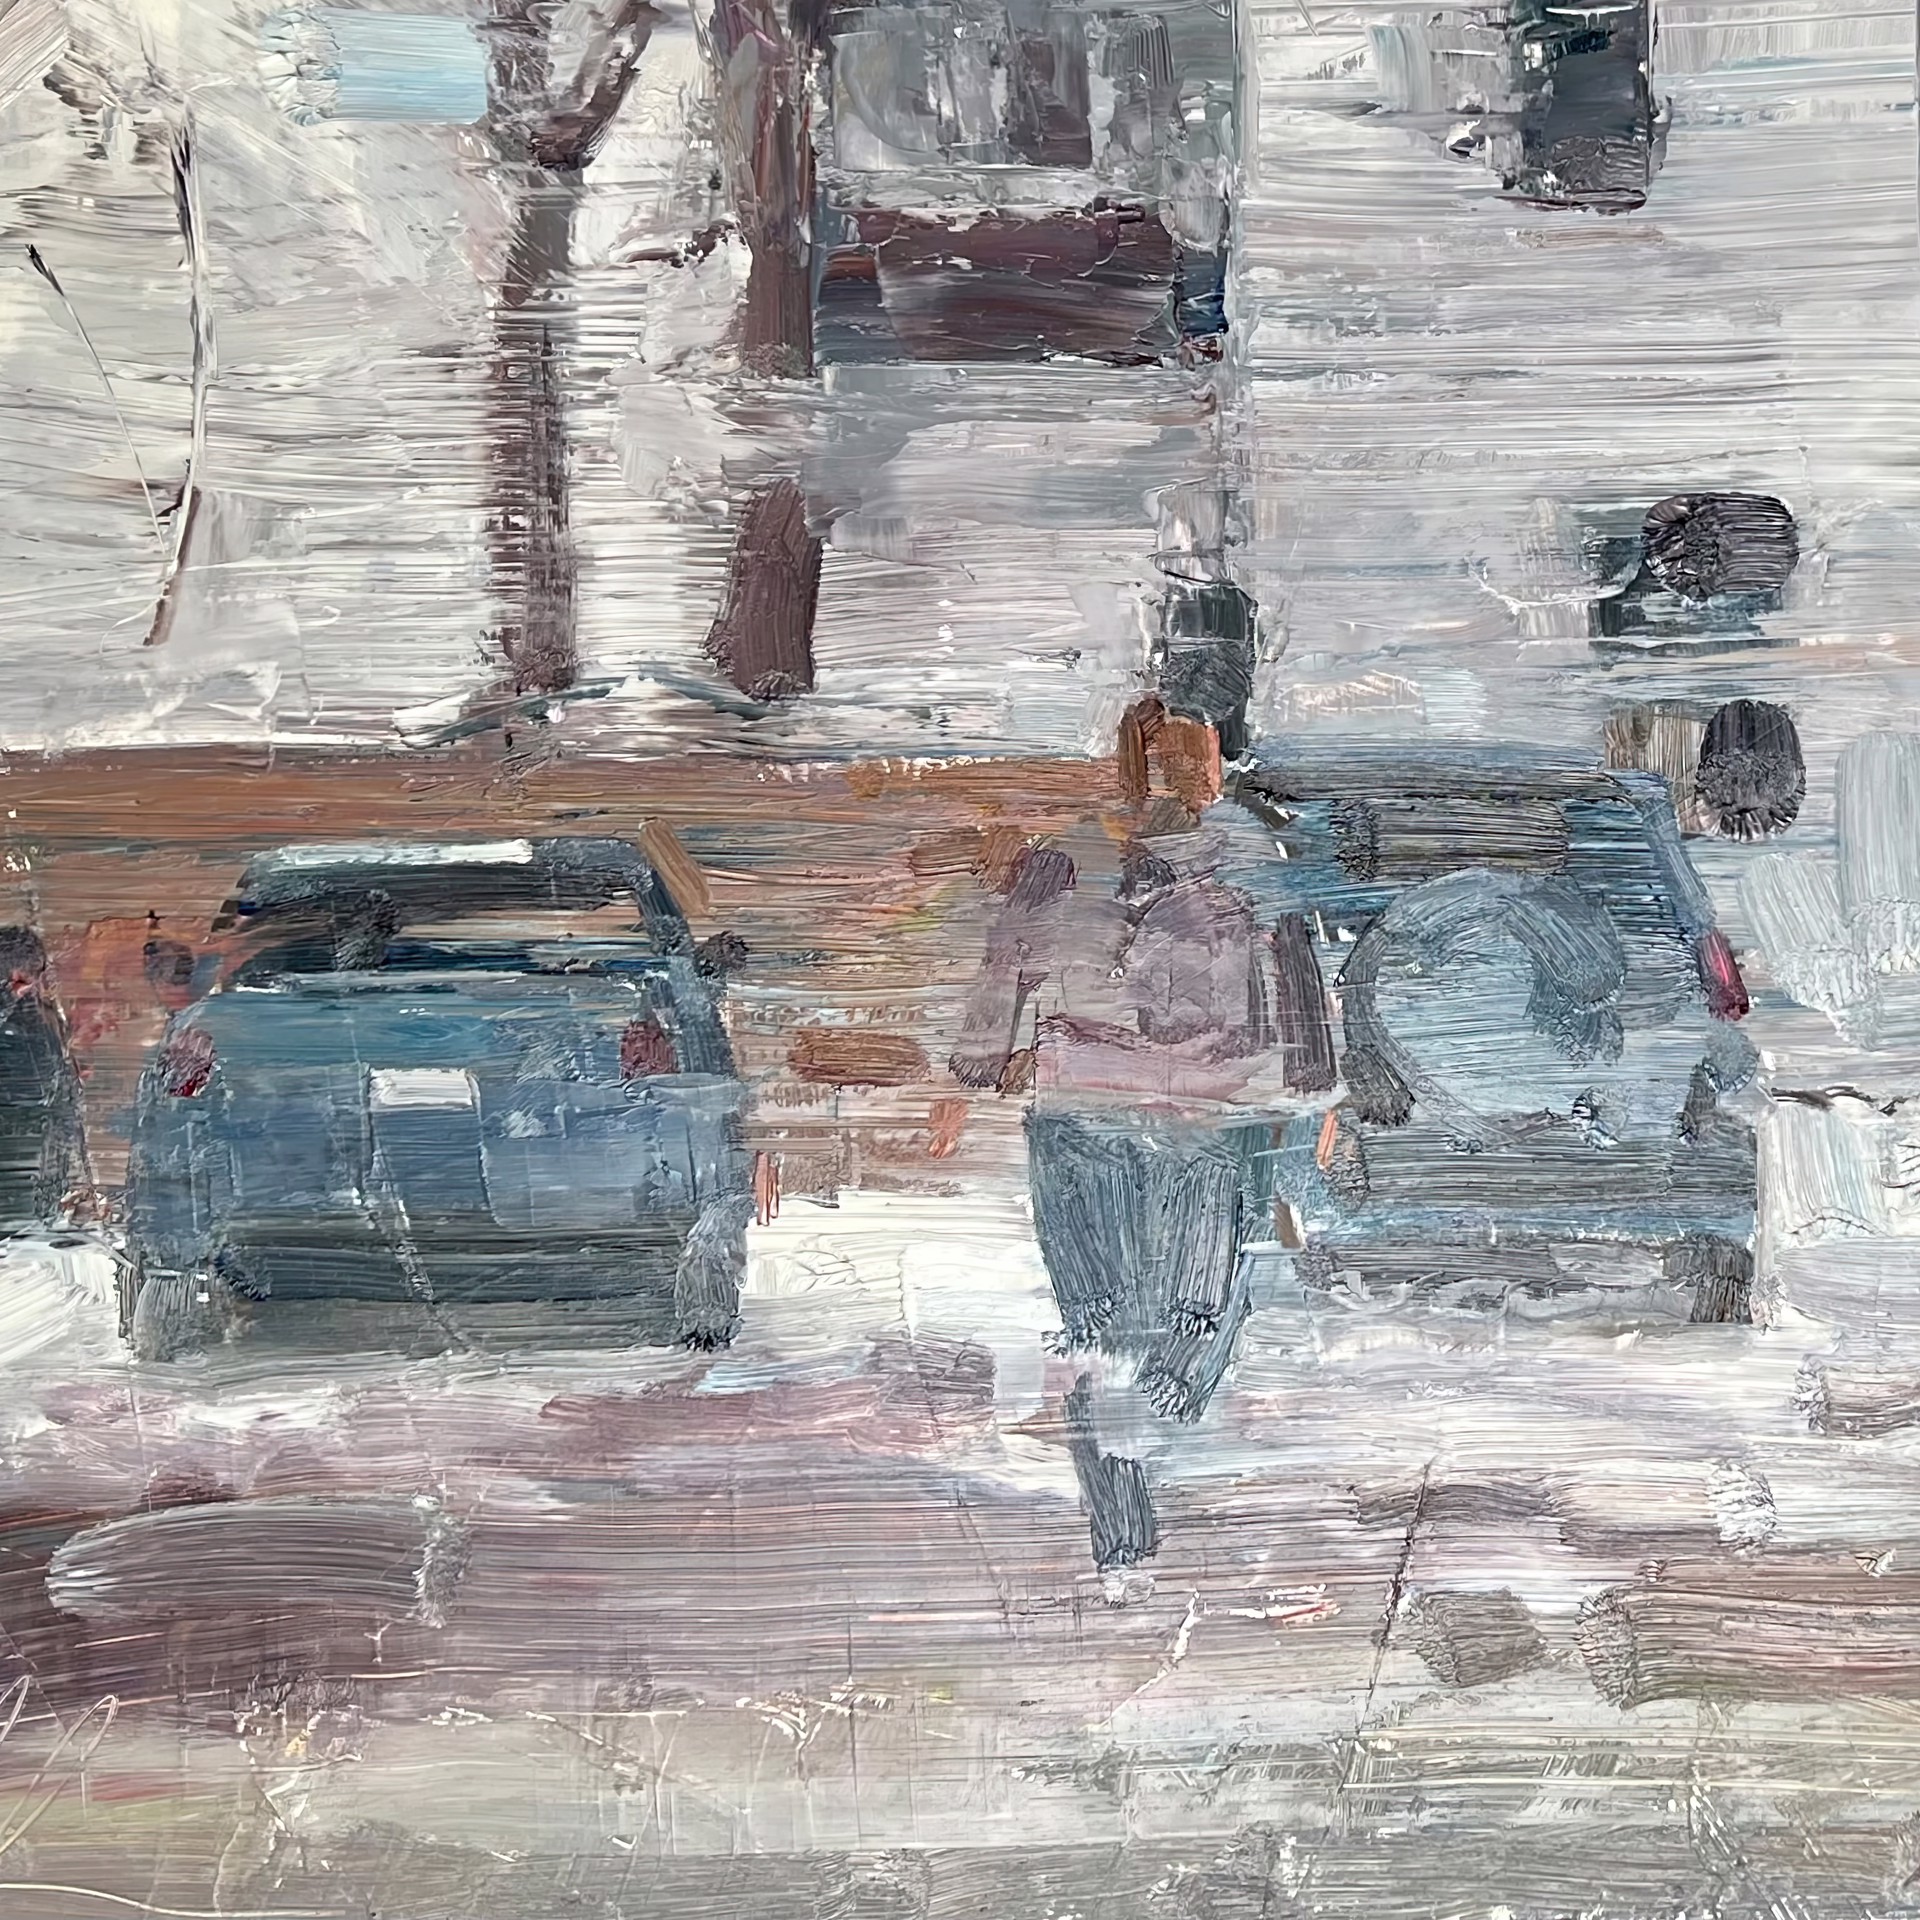 Parking Lot by Clyde Steadman